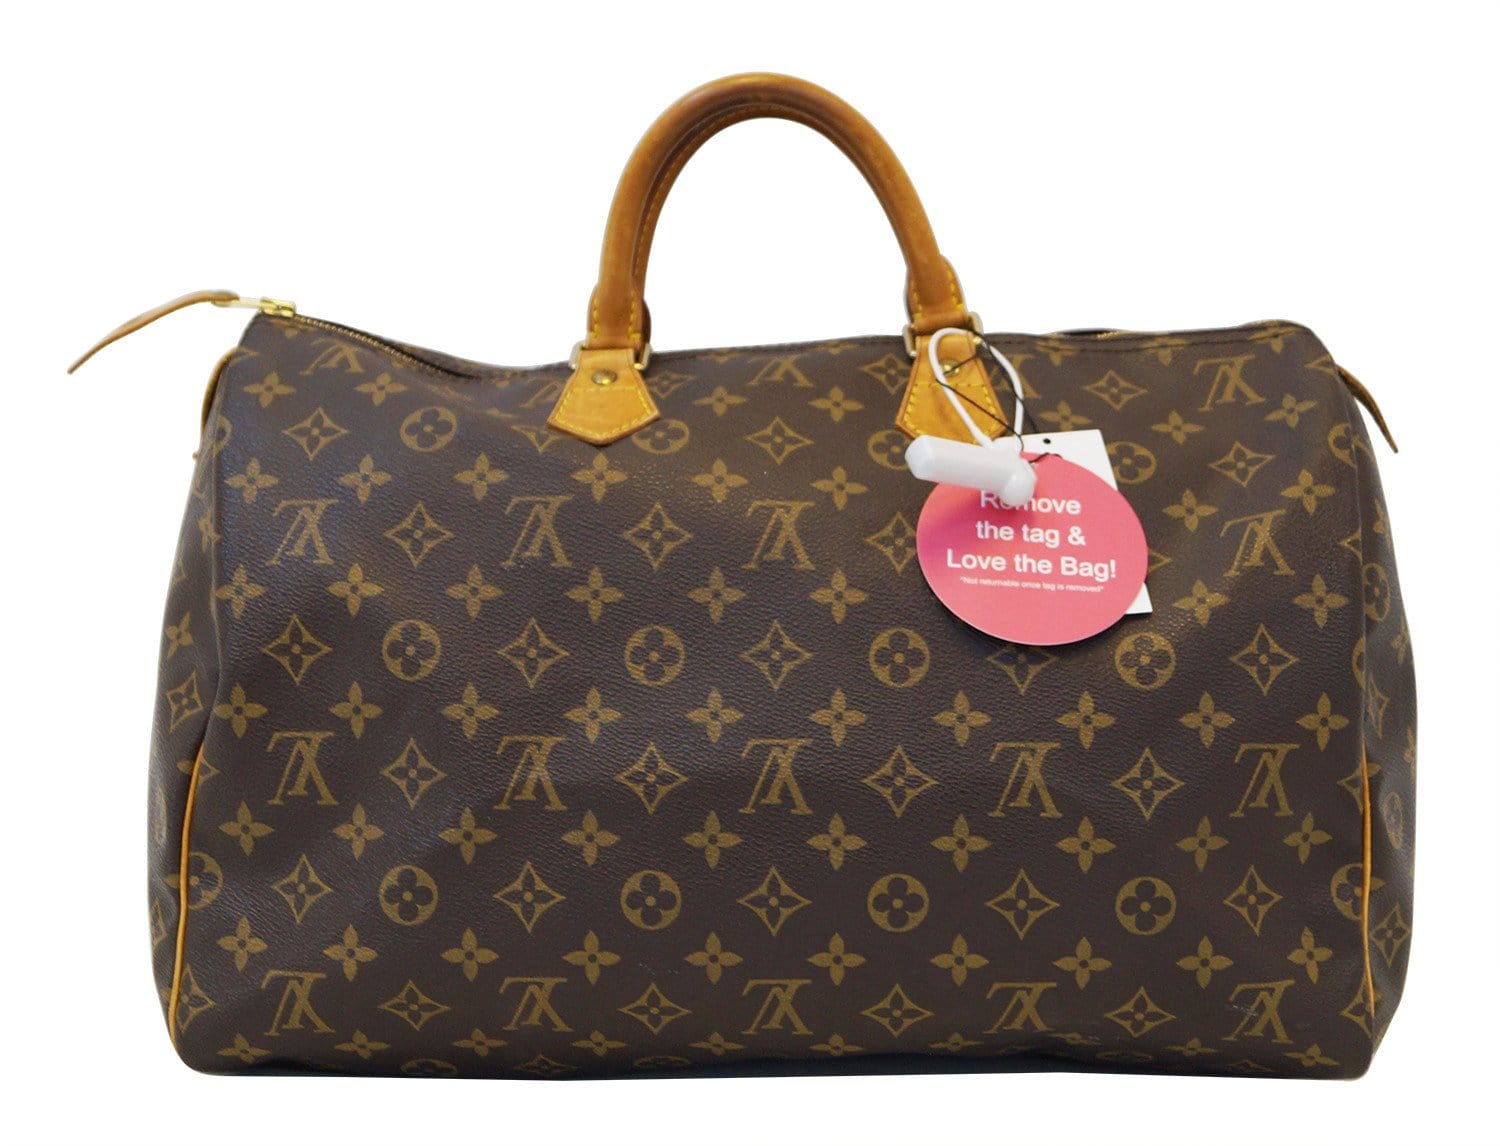 Handbags & Purses Tagged Brand_Louis Vuitton Page 2 - The Purse